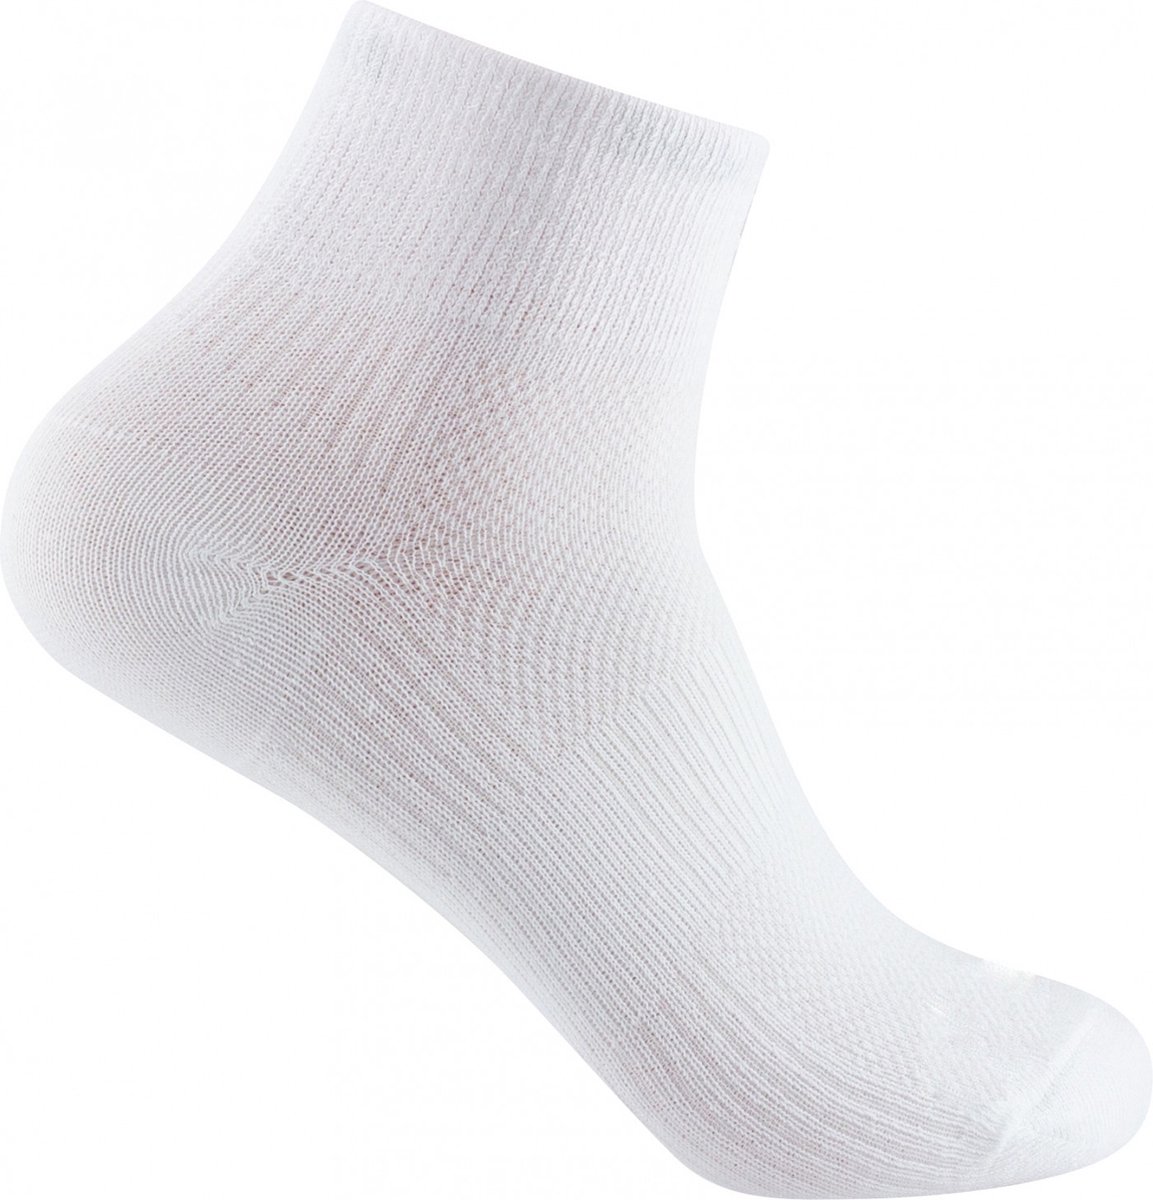 Sportsokken - Wit - 1 paar - maat 41-44.5 - Vitility High Comfort - sokken - wandelsokken